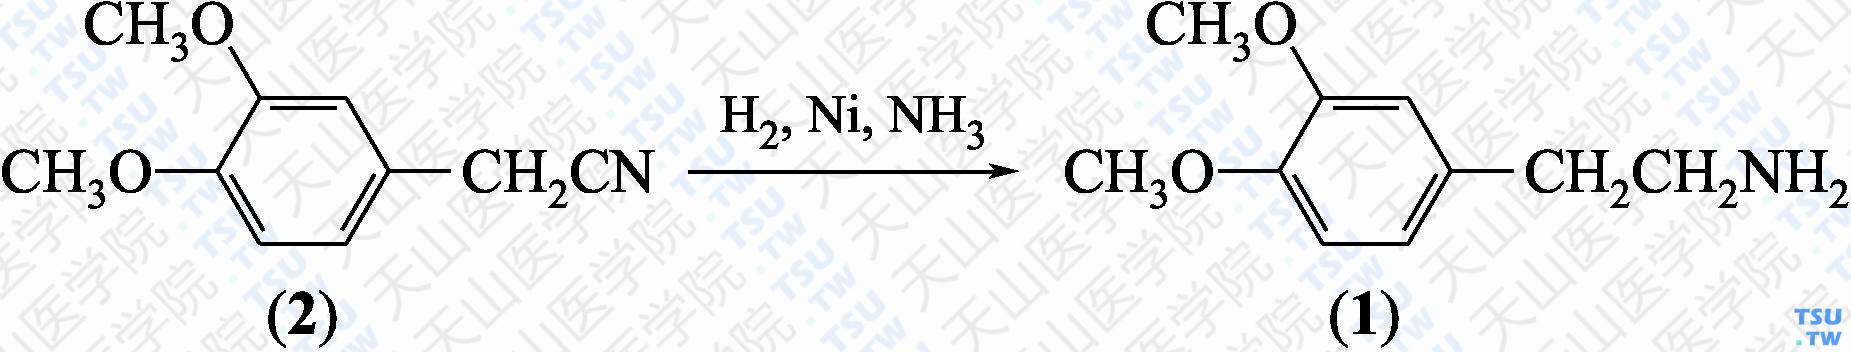 3，4-二甲氧基苯乙胺（分子式：C<sub>10</sub>H<sub>15</sub>NO<sub>2</sub>）的合成方法路线及其结构式